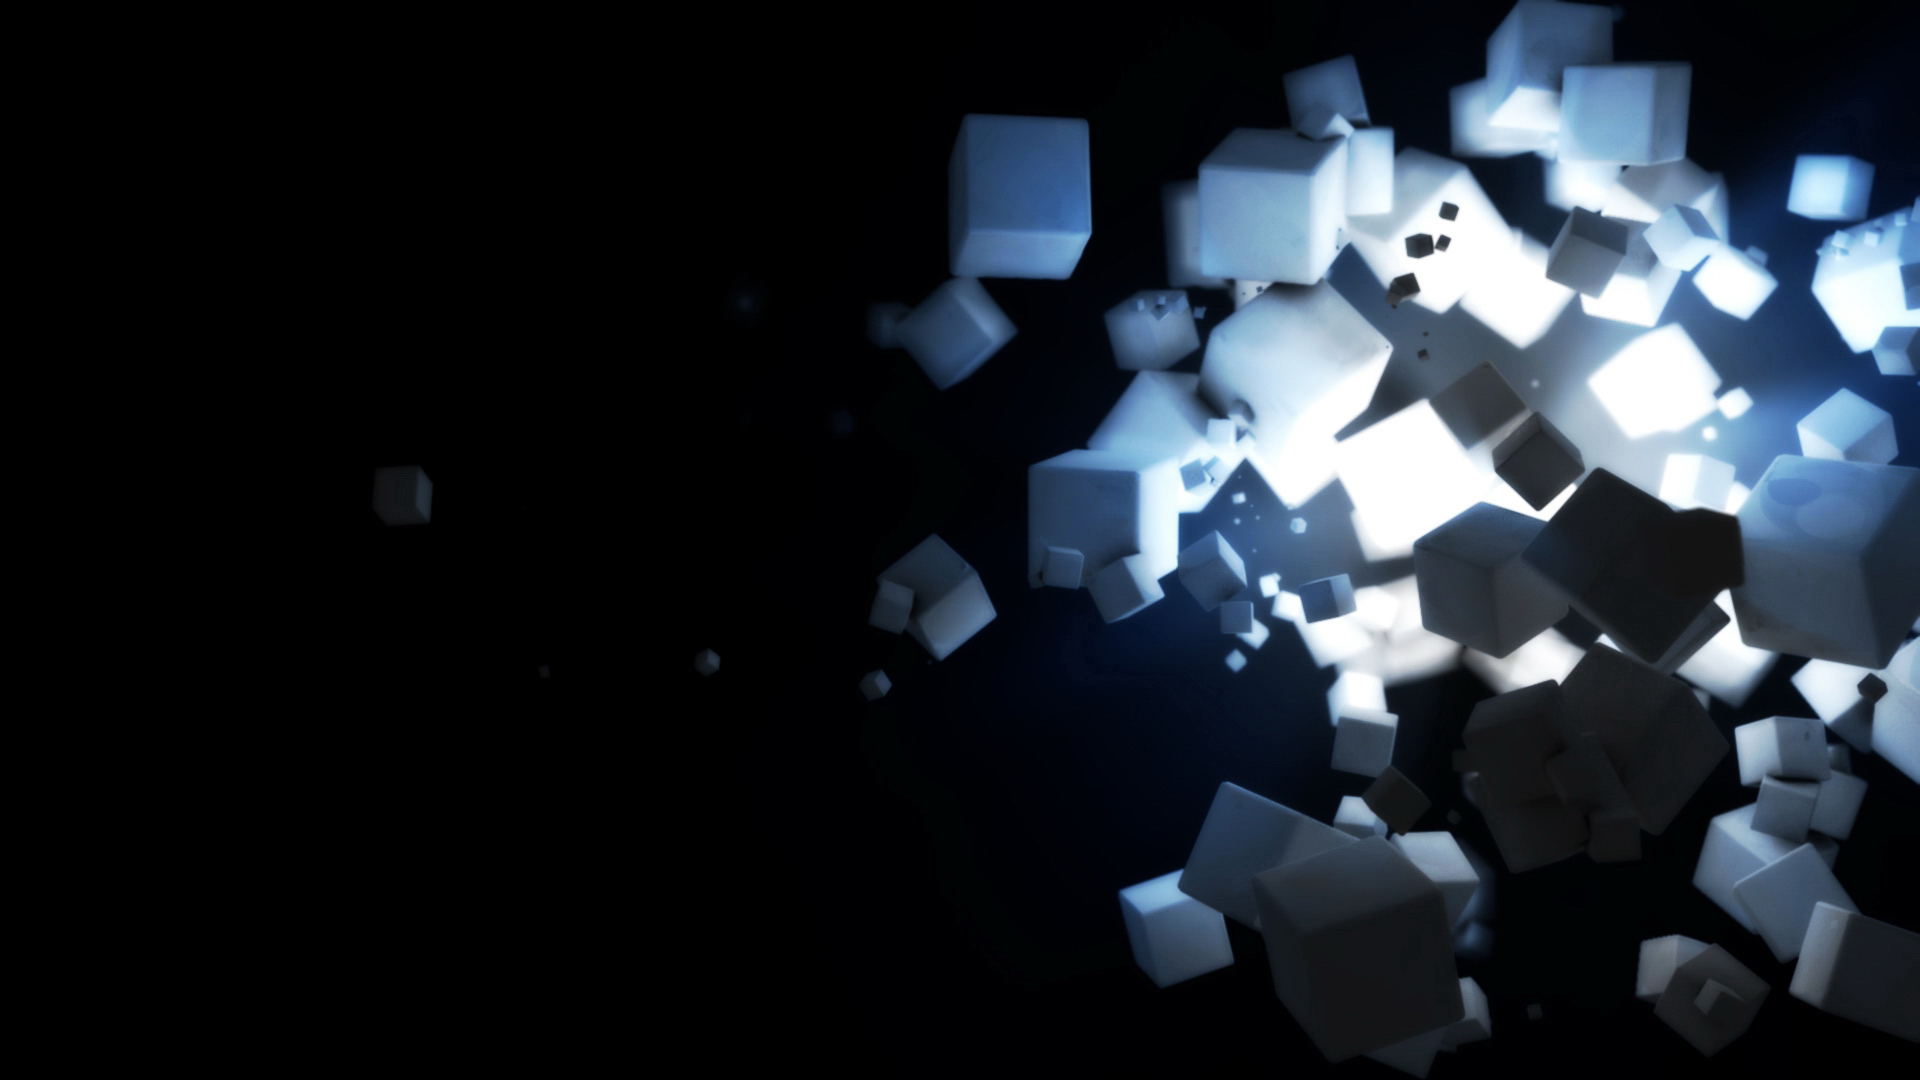 Abstract white cube desktop wallpaper.